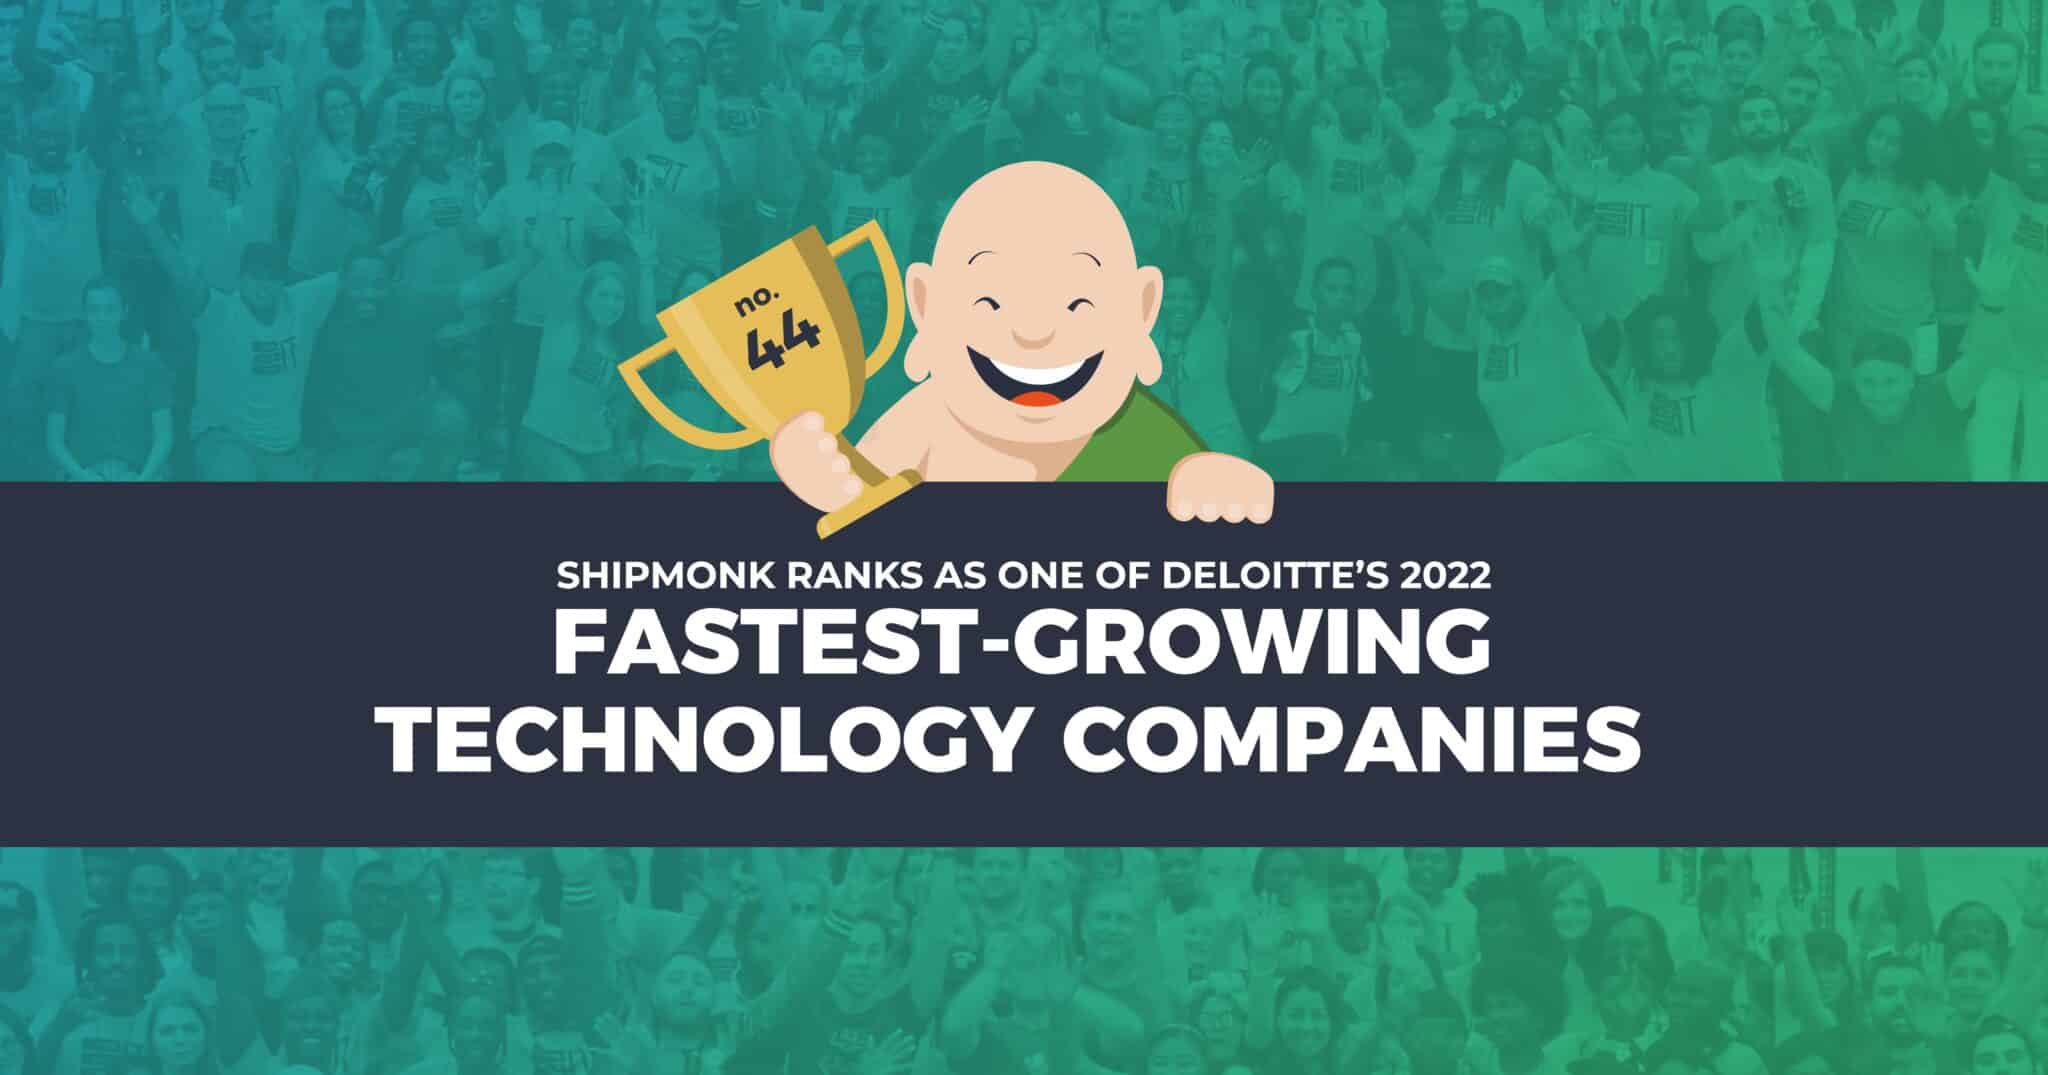 ShipMonk Ranks No. 44 on Deloitte's 2022 Fastest-Growing Technology Companies List